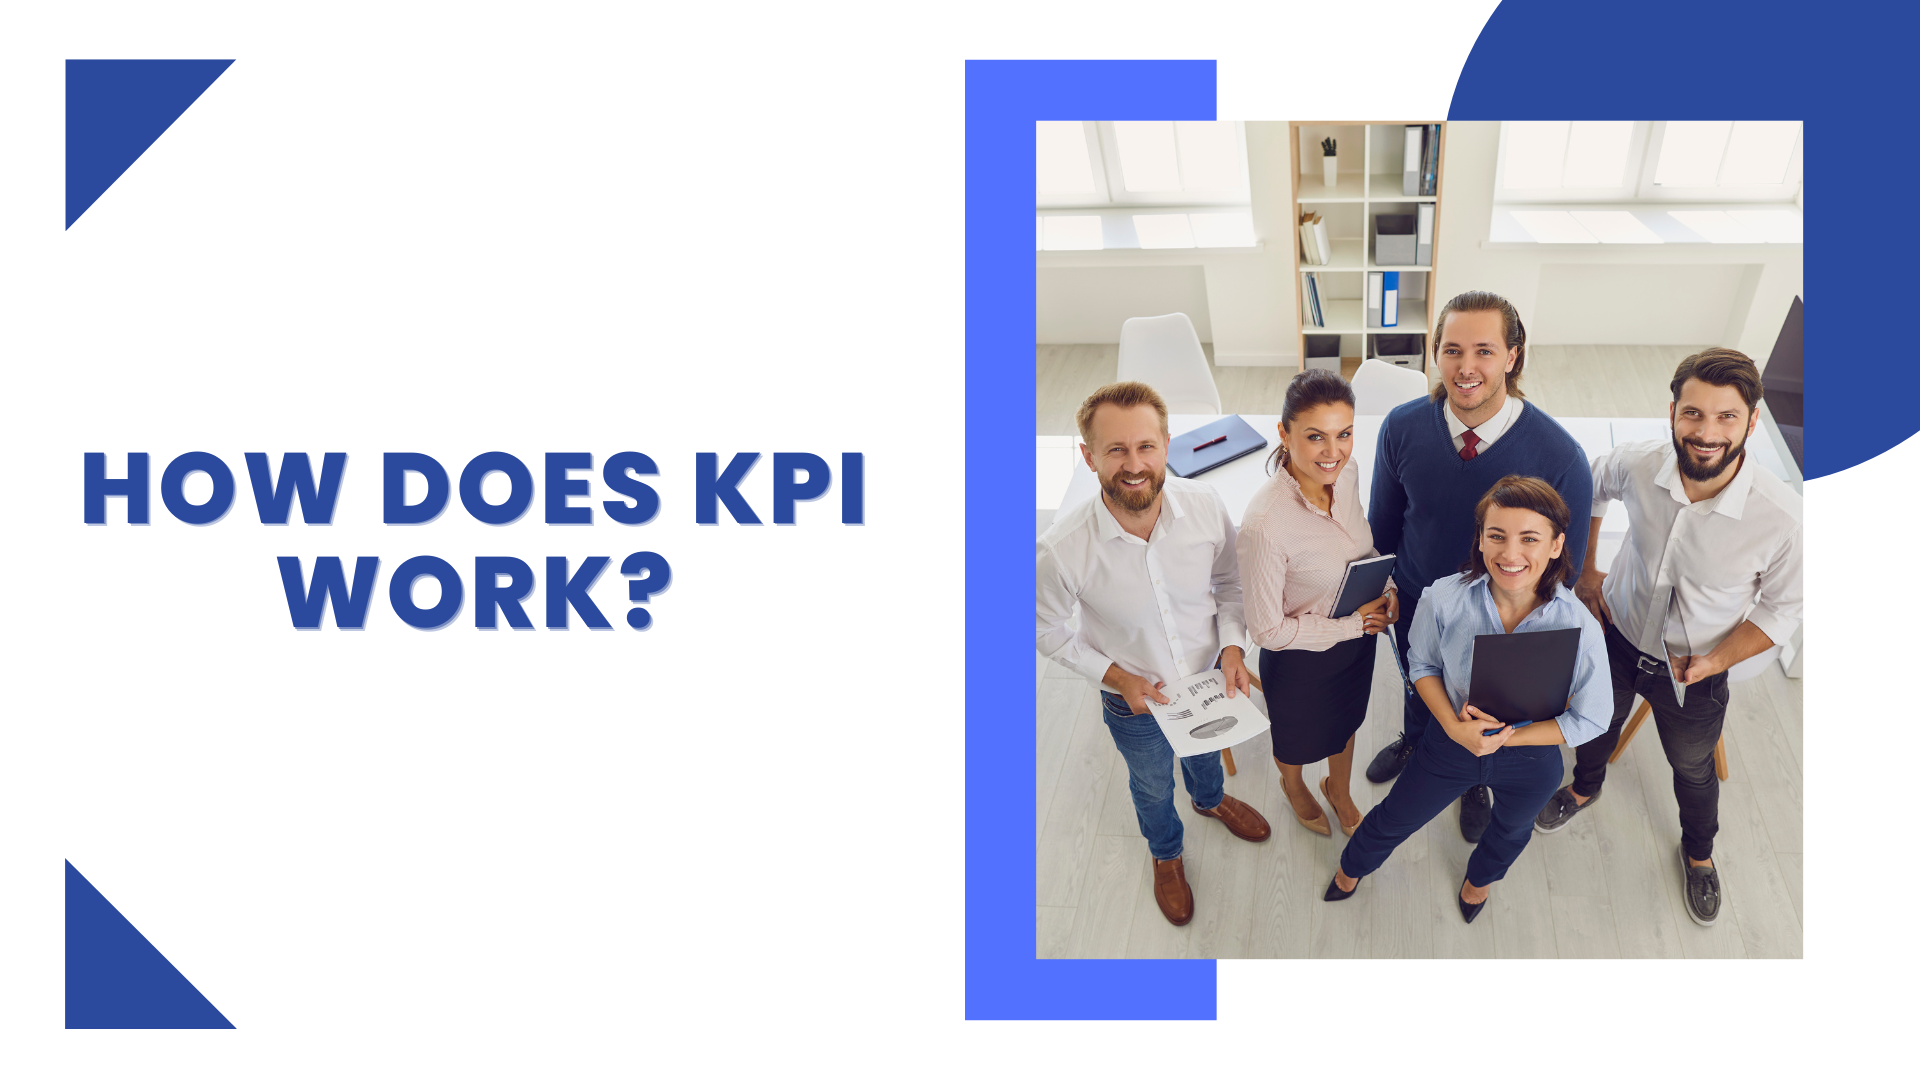 How does KPI work?